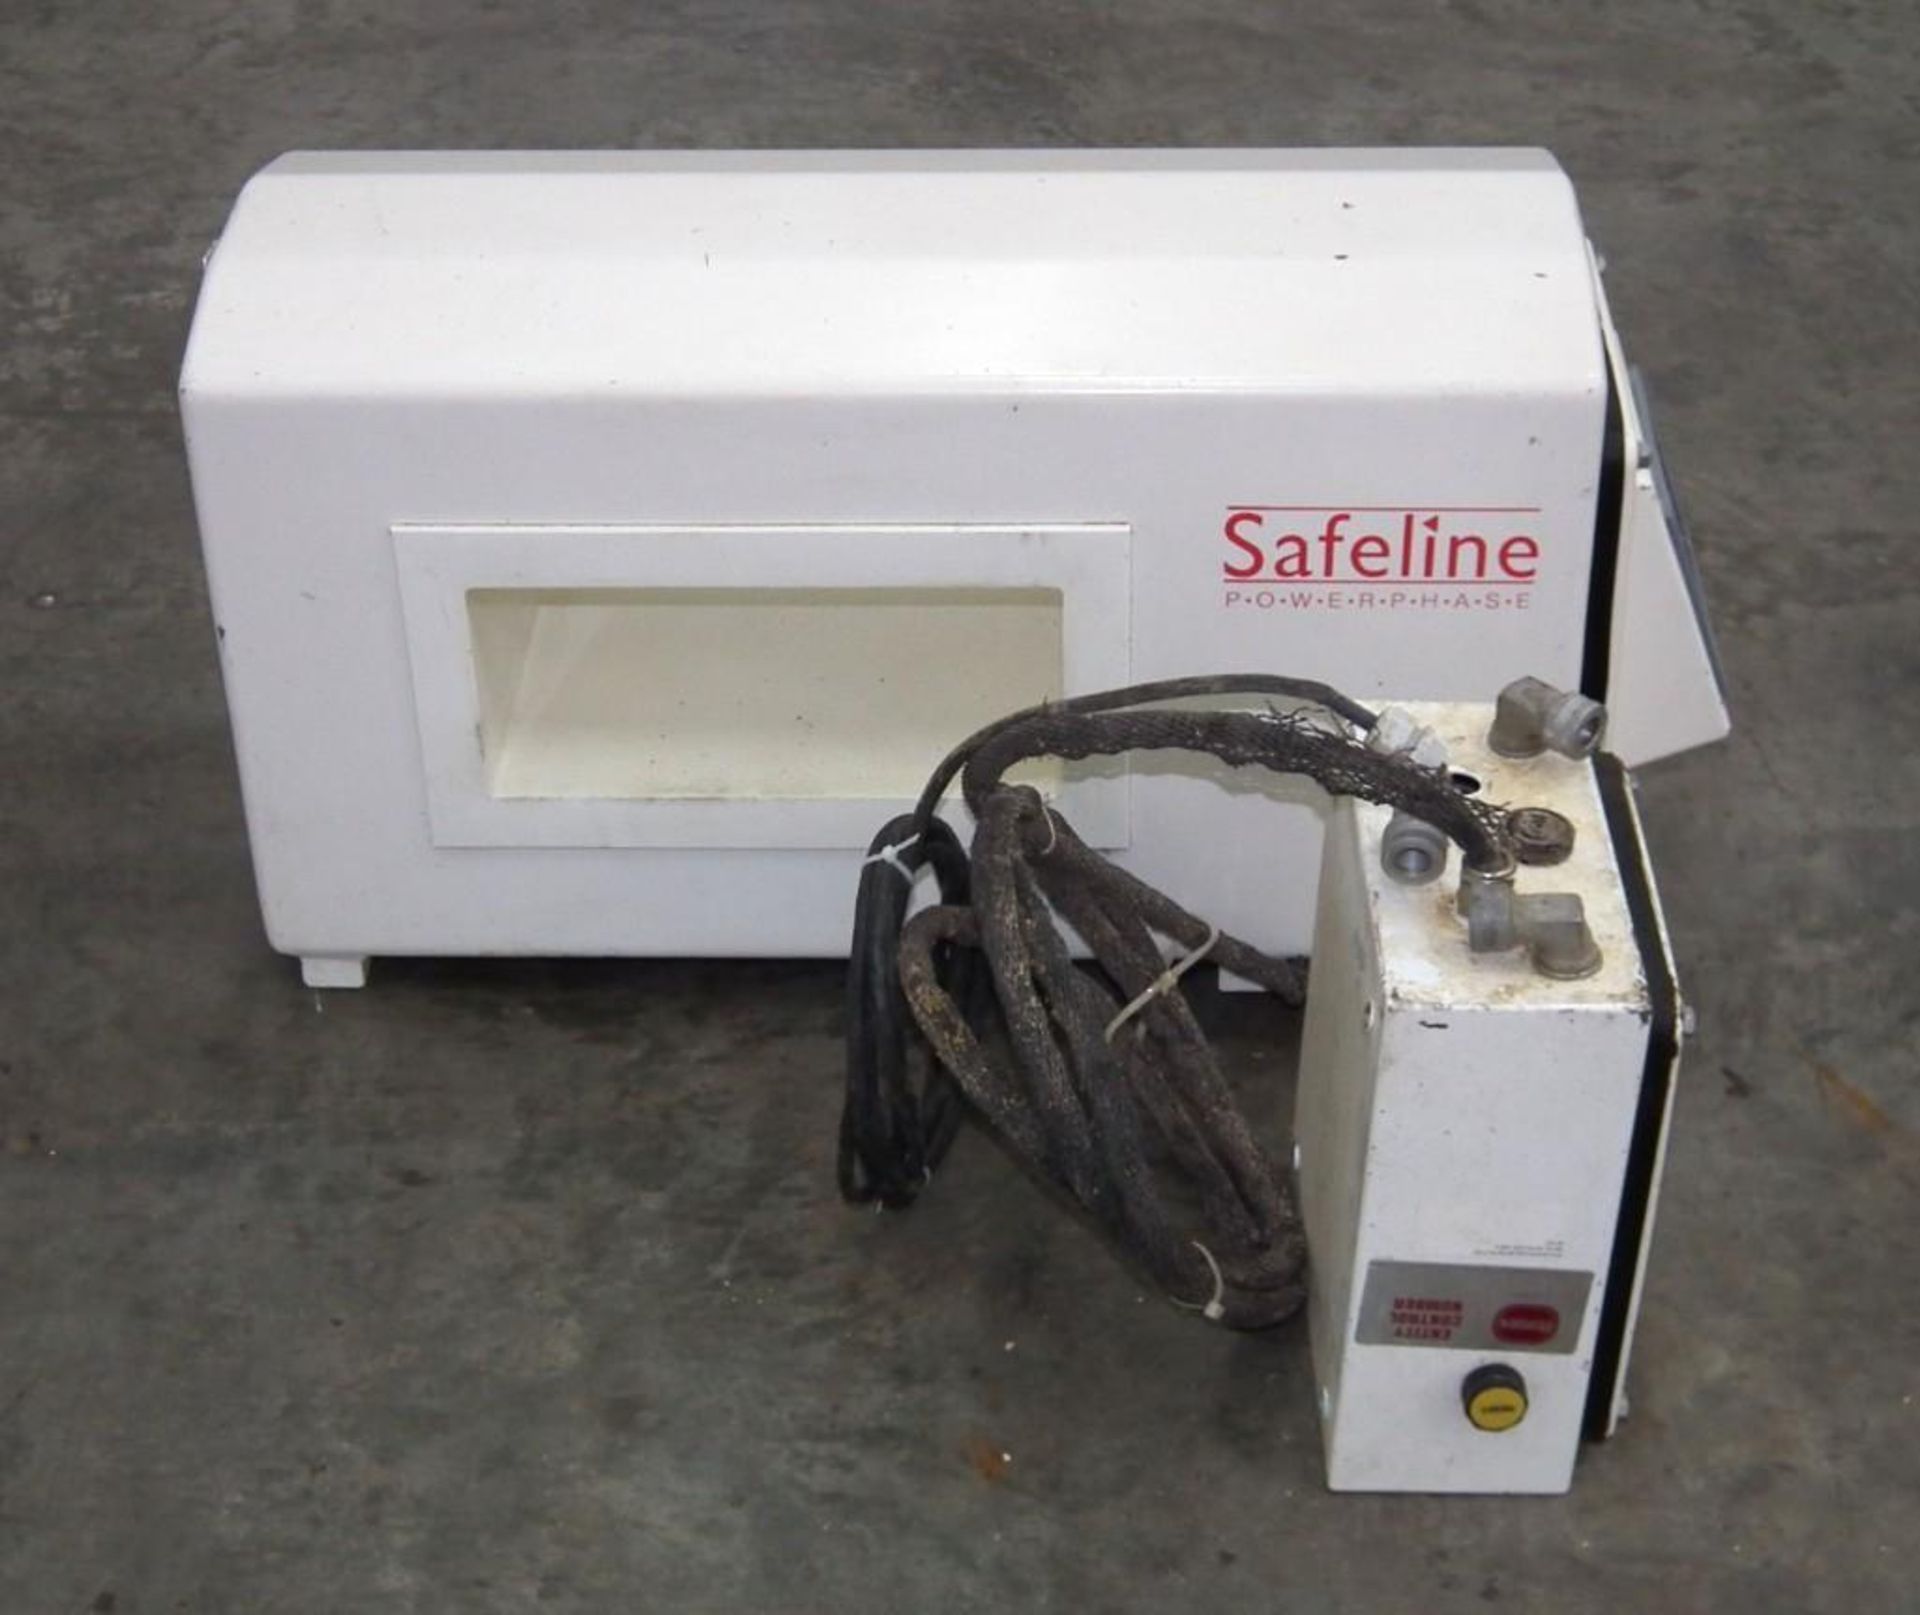 Safeline Metal Detector Powerphase 12" Wide x 5" H - Image 4 of 8